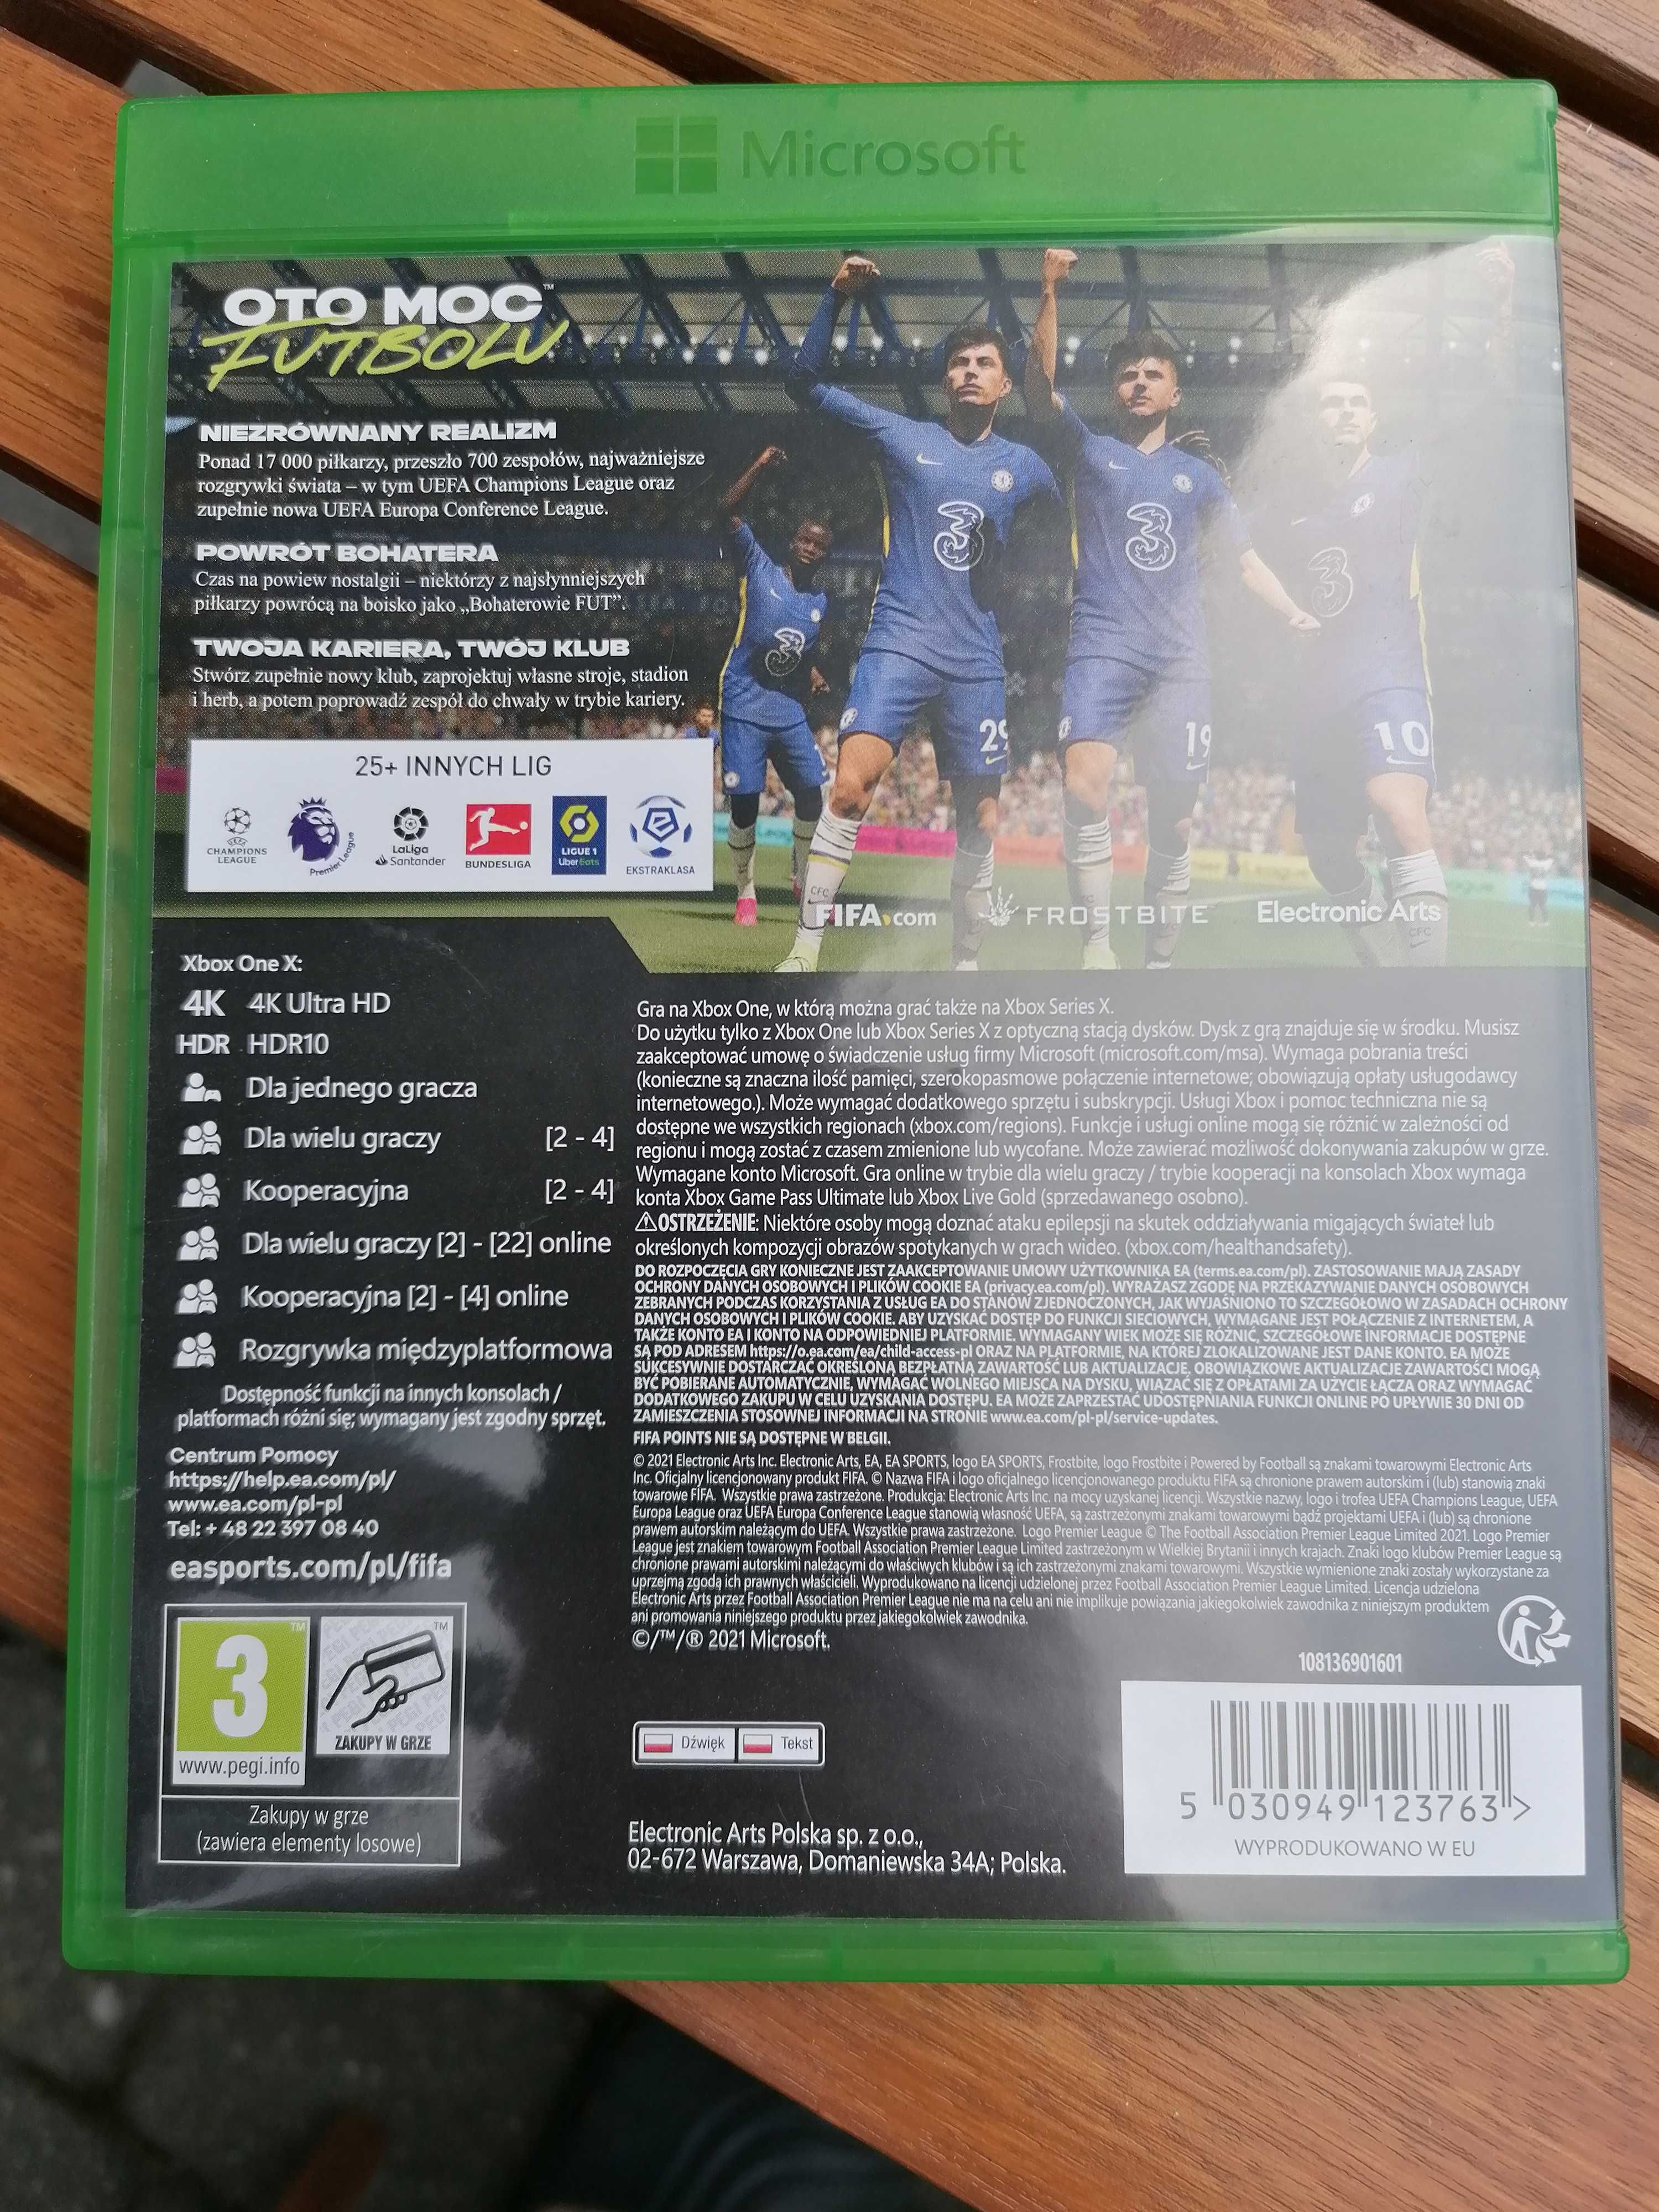 FIFA 22 Xbox one